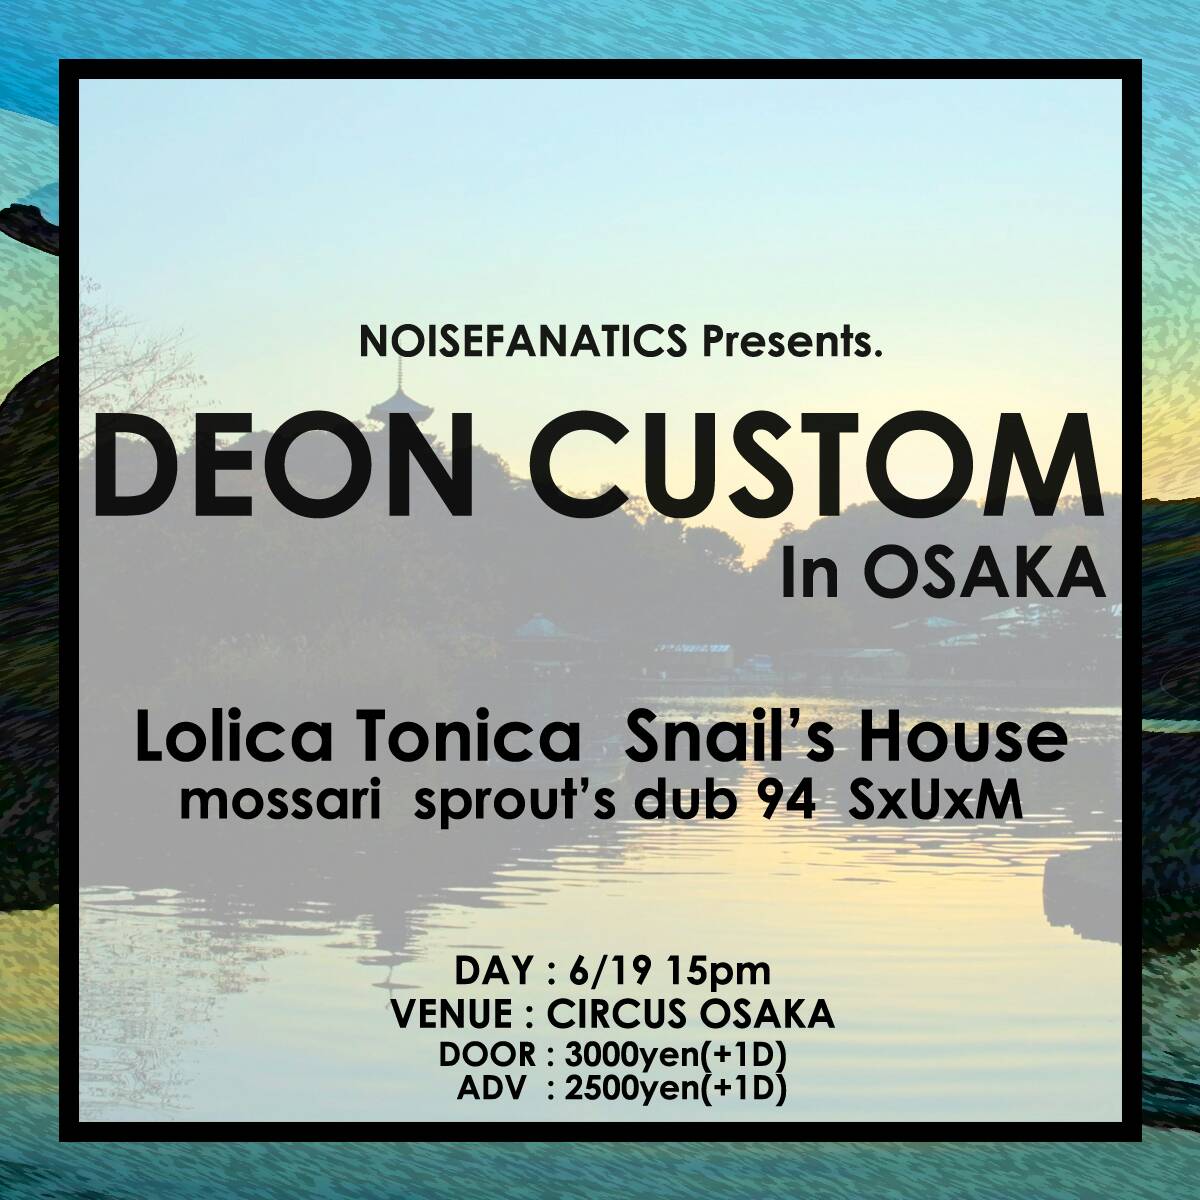 Don Custom Osaka